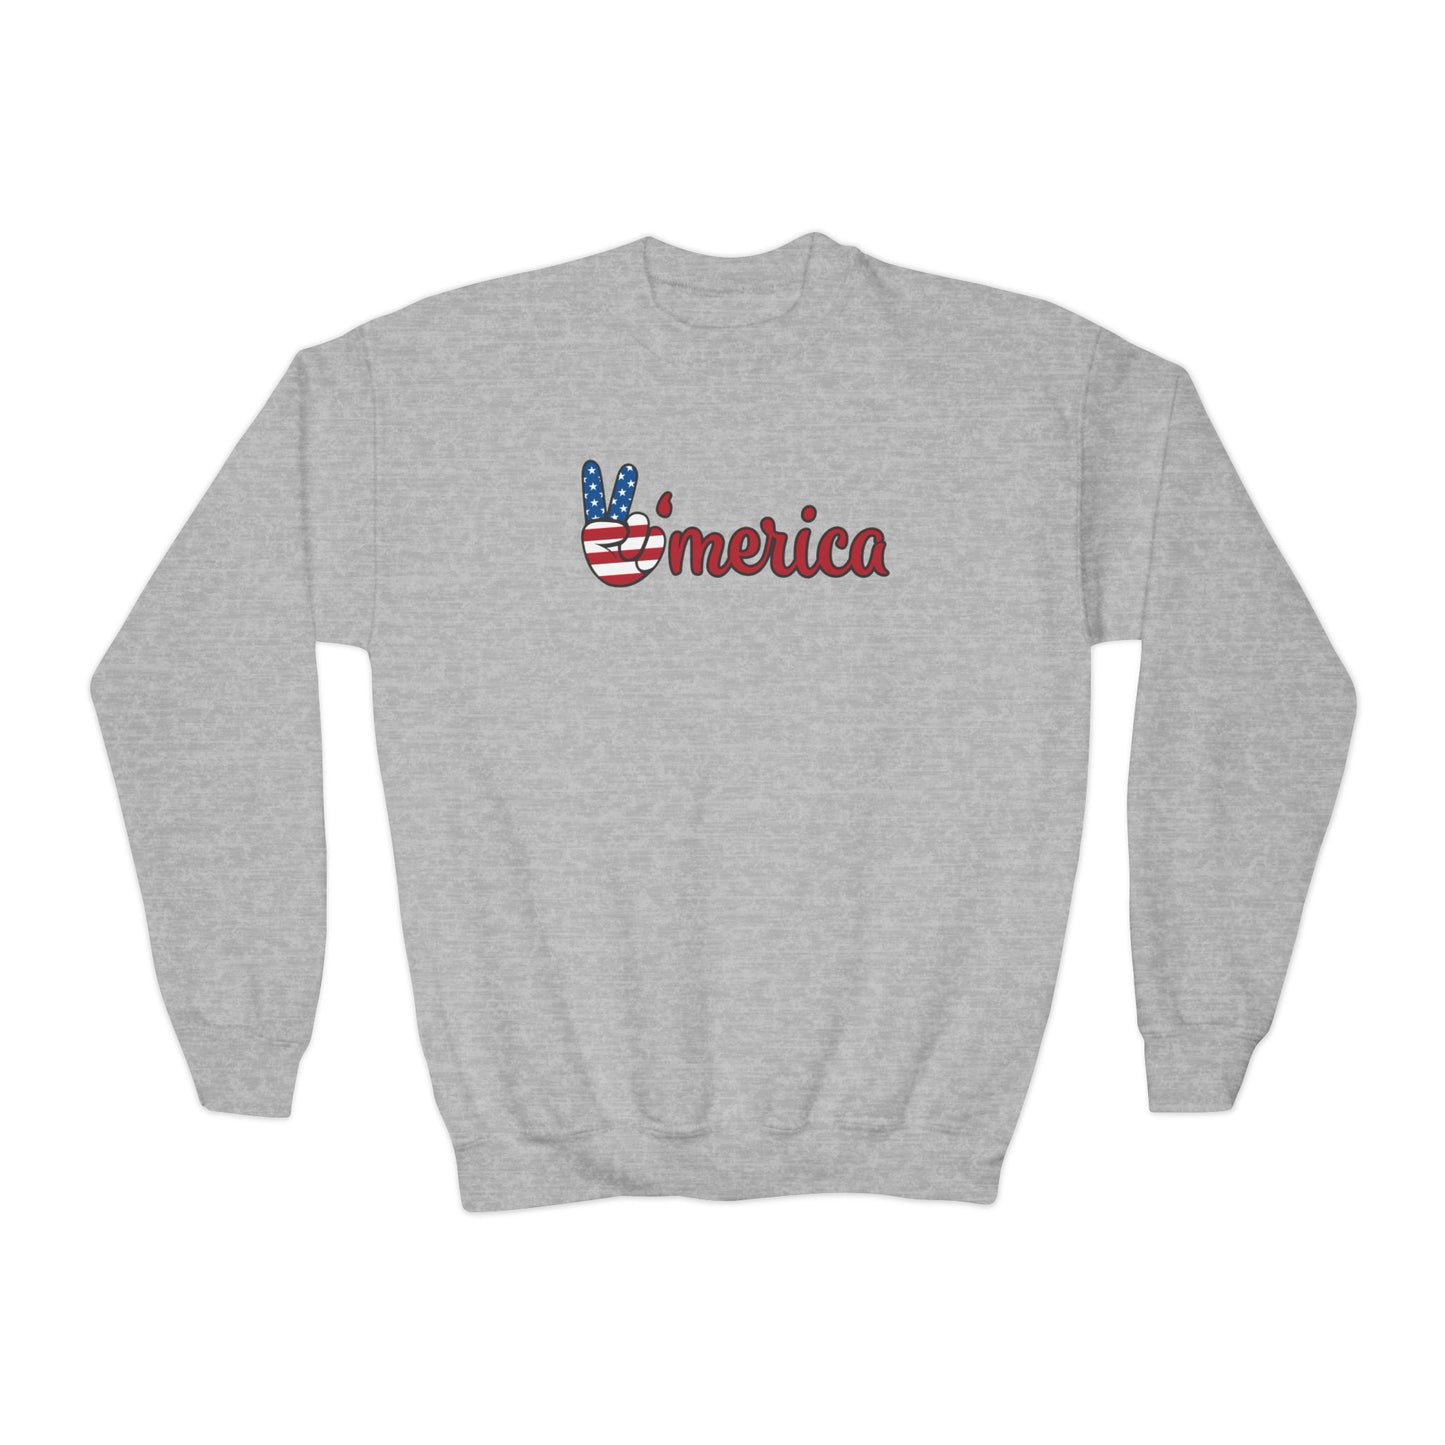 America Youth Sweatshirt